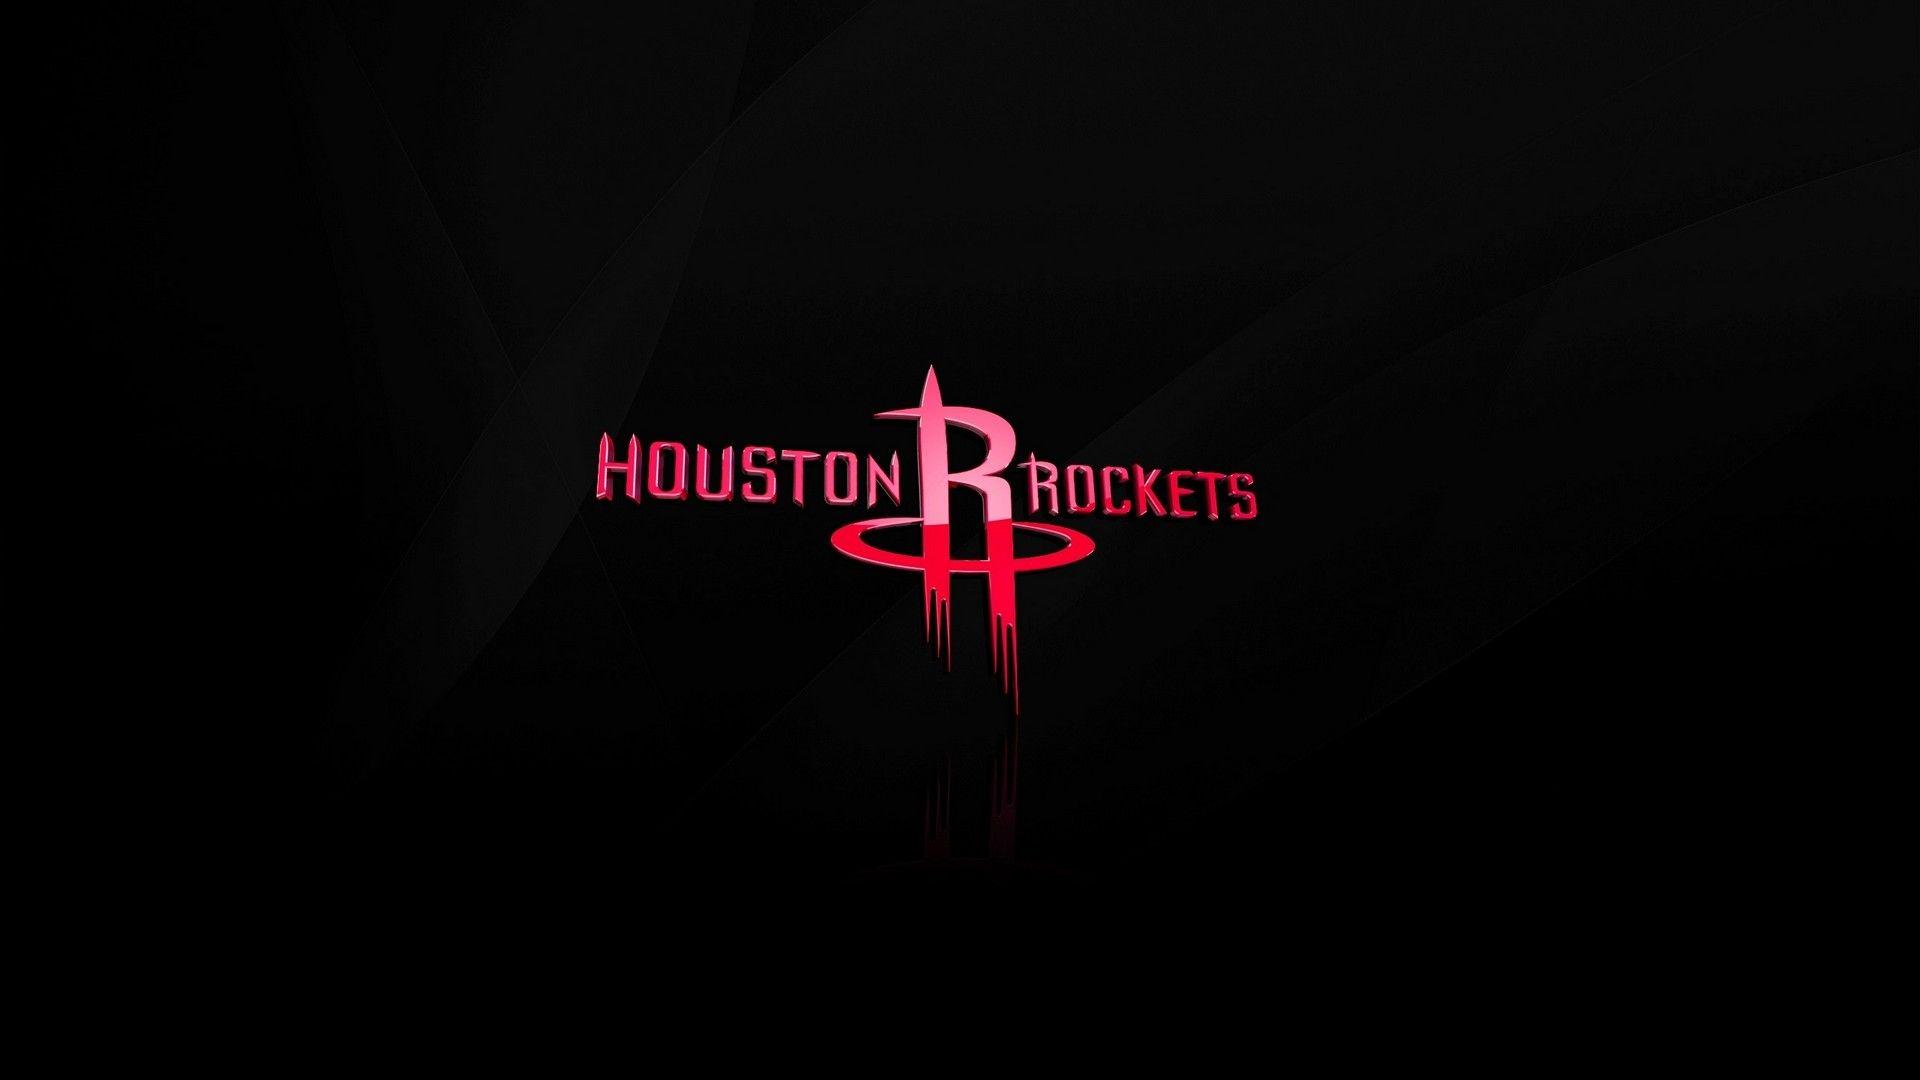 Houston Rockets Wallpaper HD. Basketball Wallpaper. Wallpaper